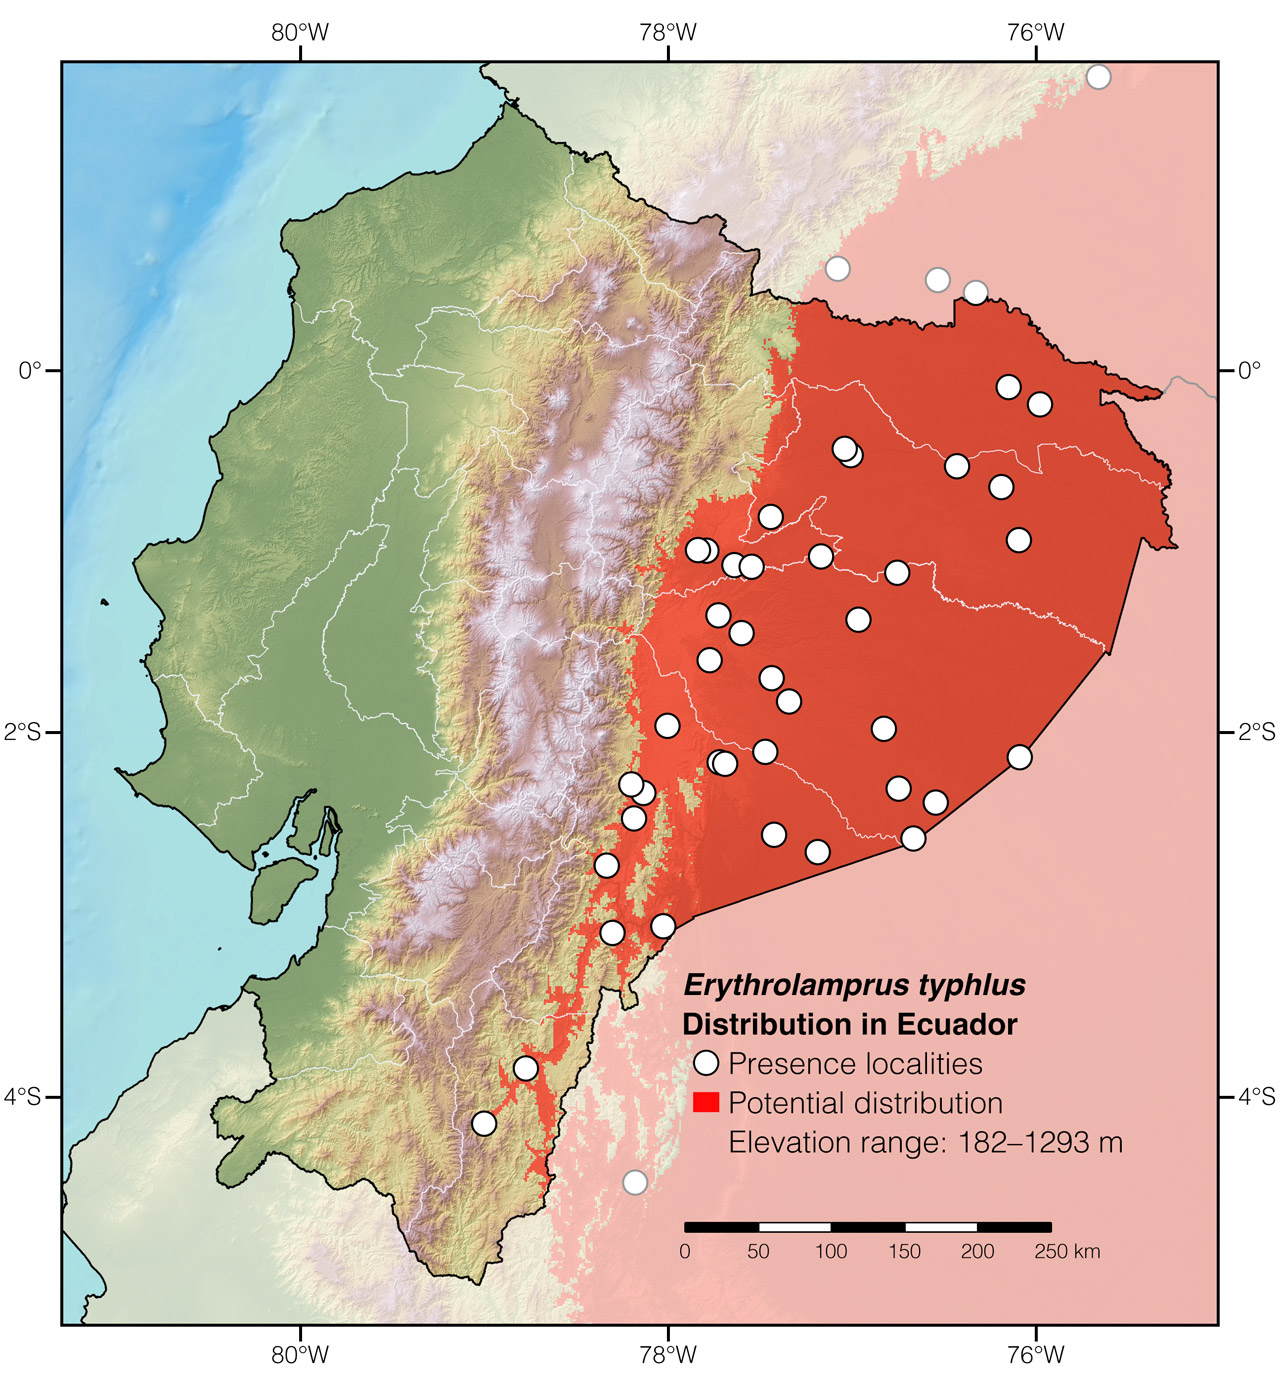 Distribution of Erythrolamprus typhlus in Ecuador